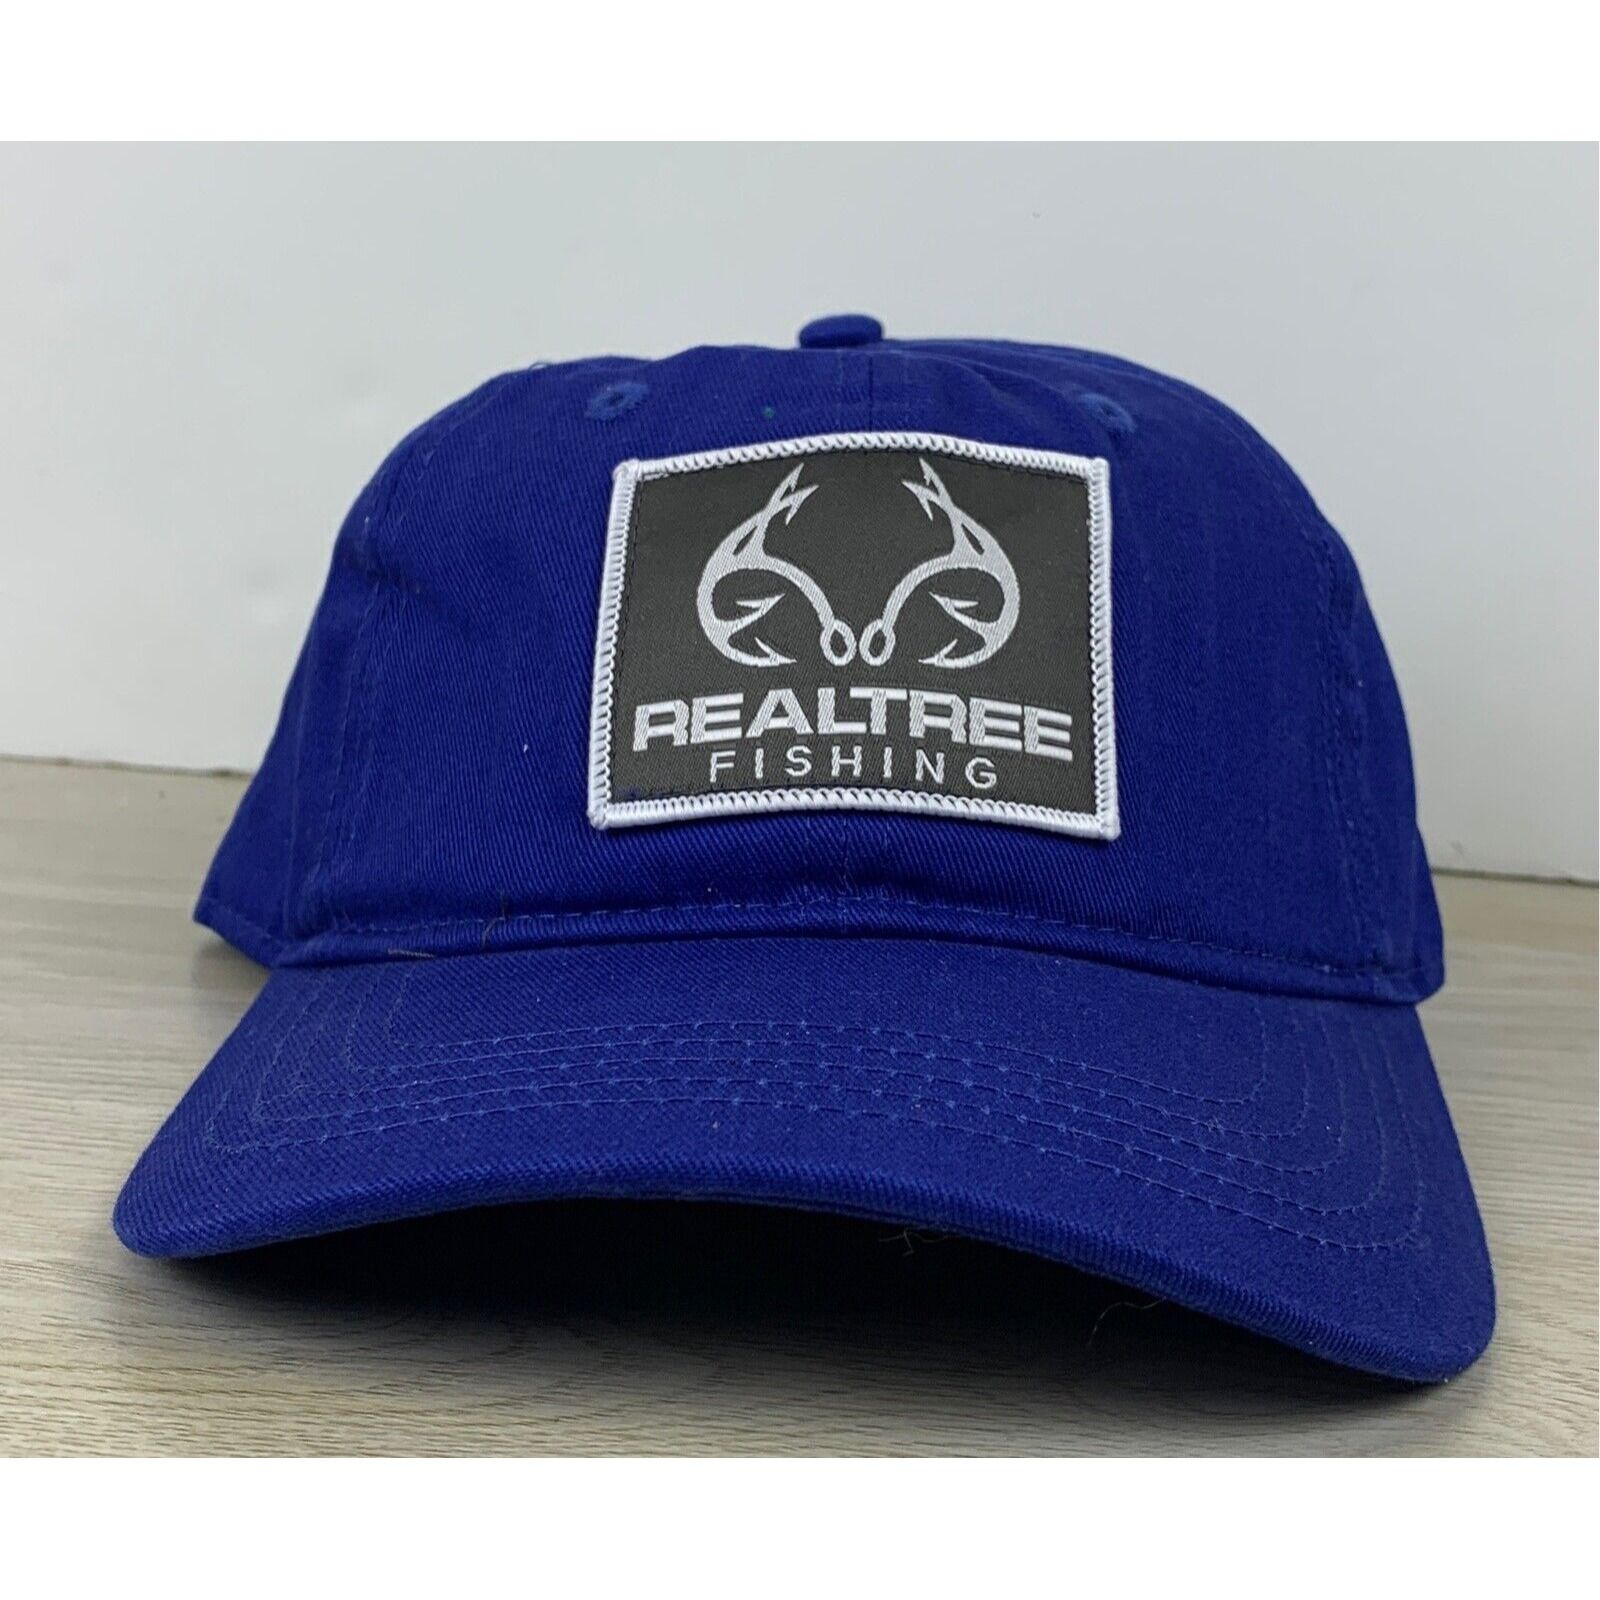 Realtree RealTree Fishing Hat Blue Hat Adult Blue OSFA Adjustable Hat